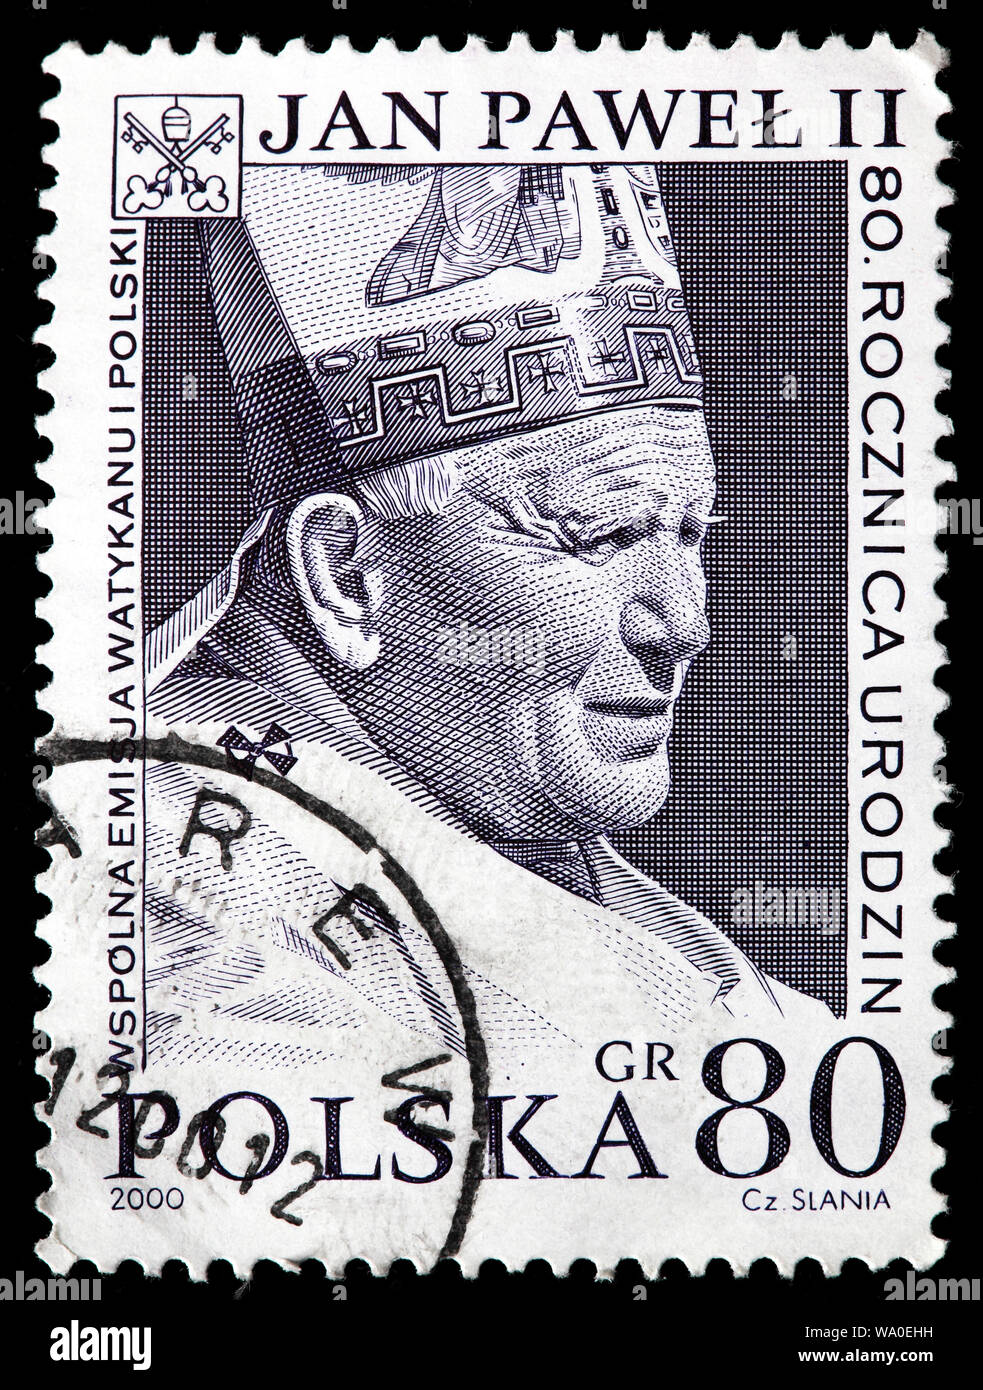 Pope John Paul II, postage stamp, Poland, 2000 Stock Photo